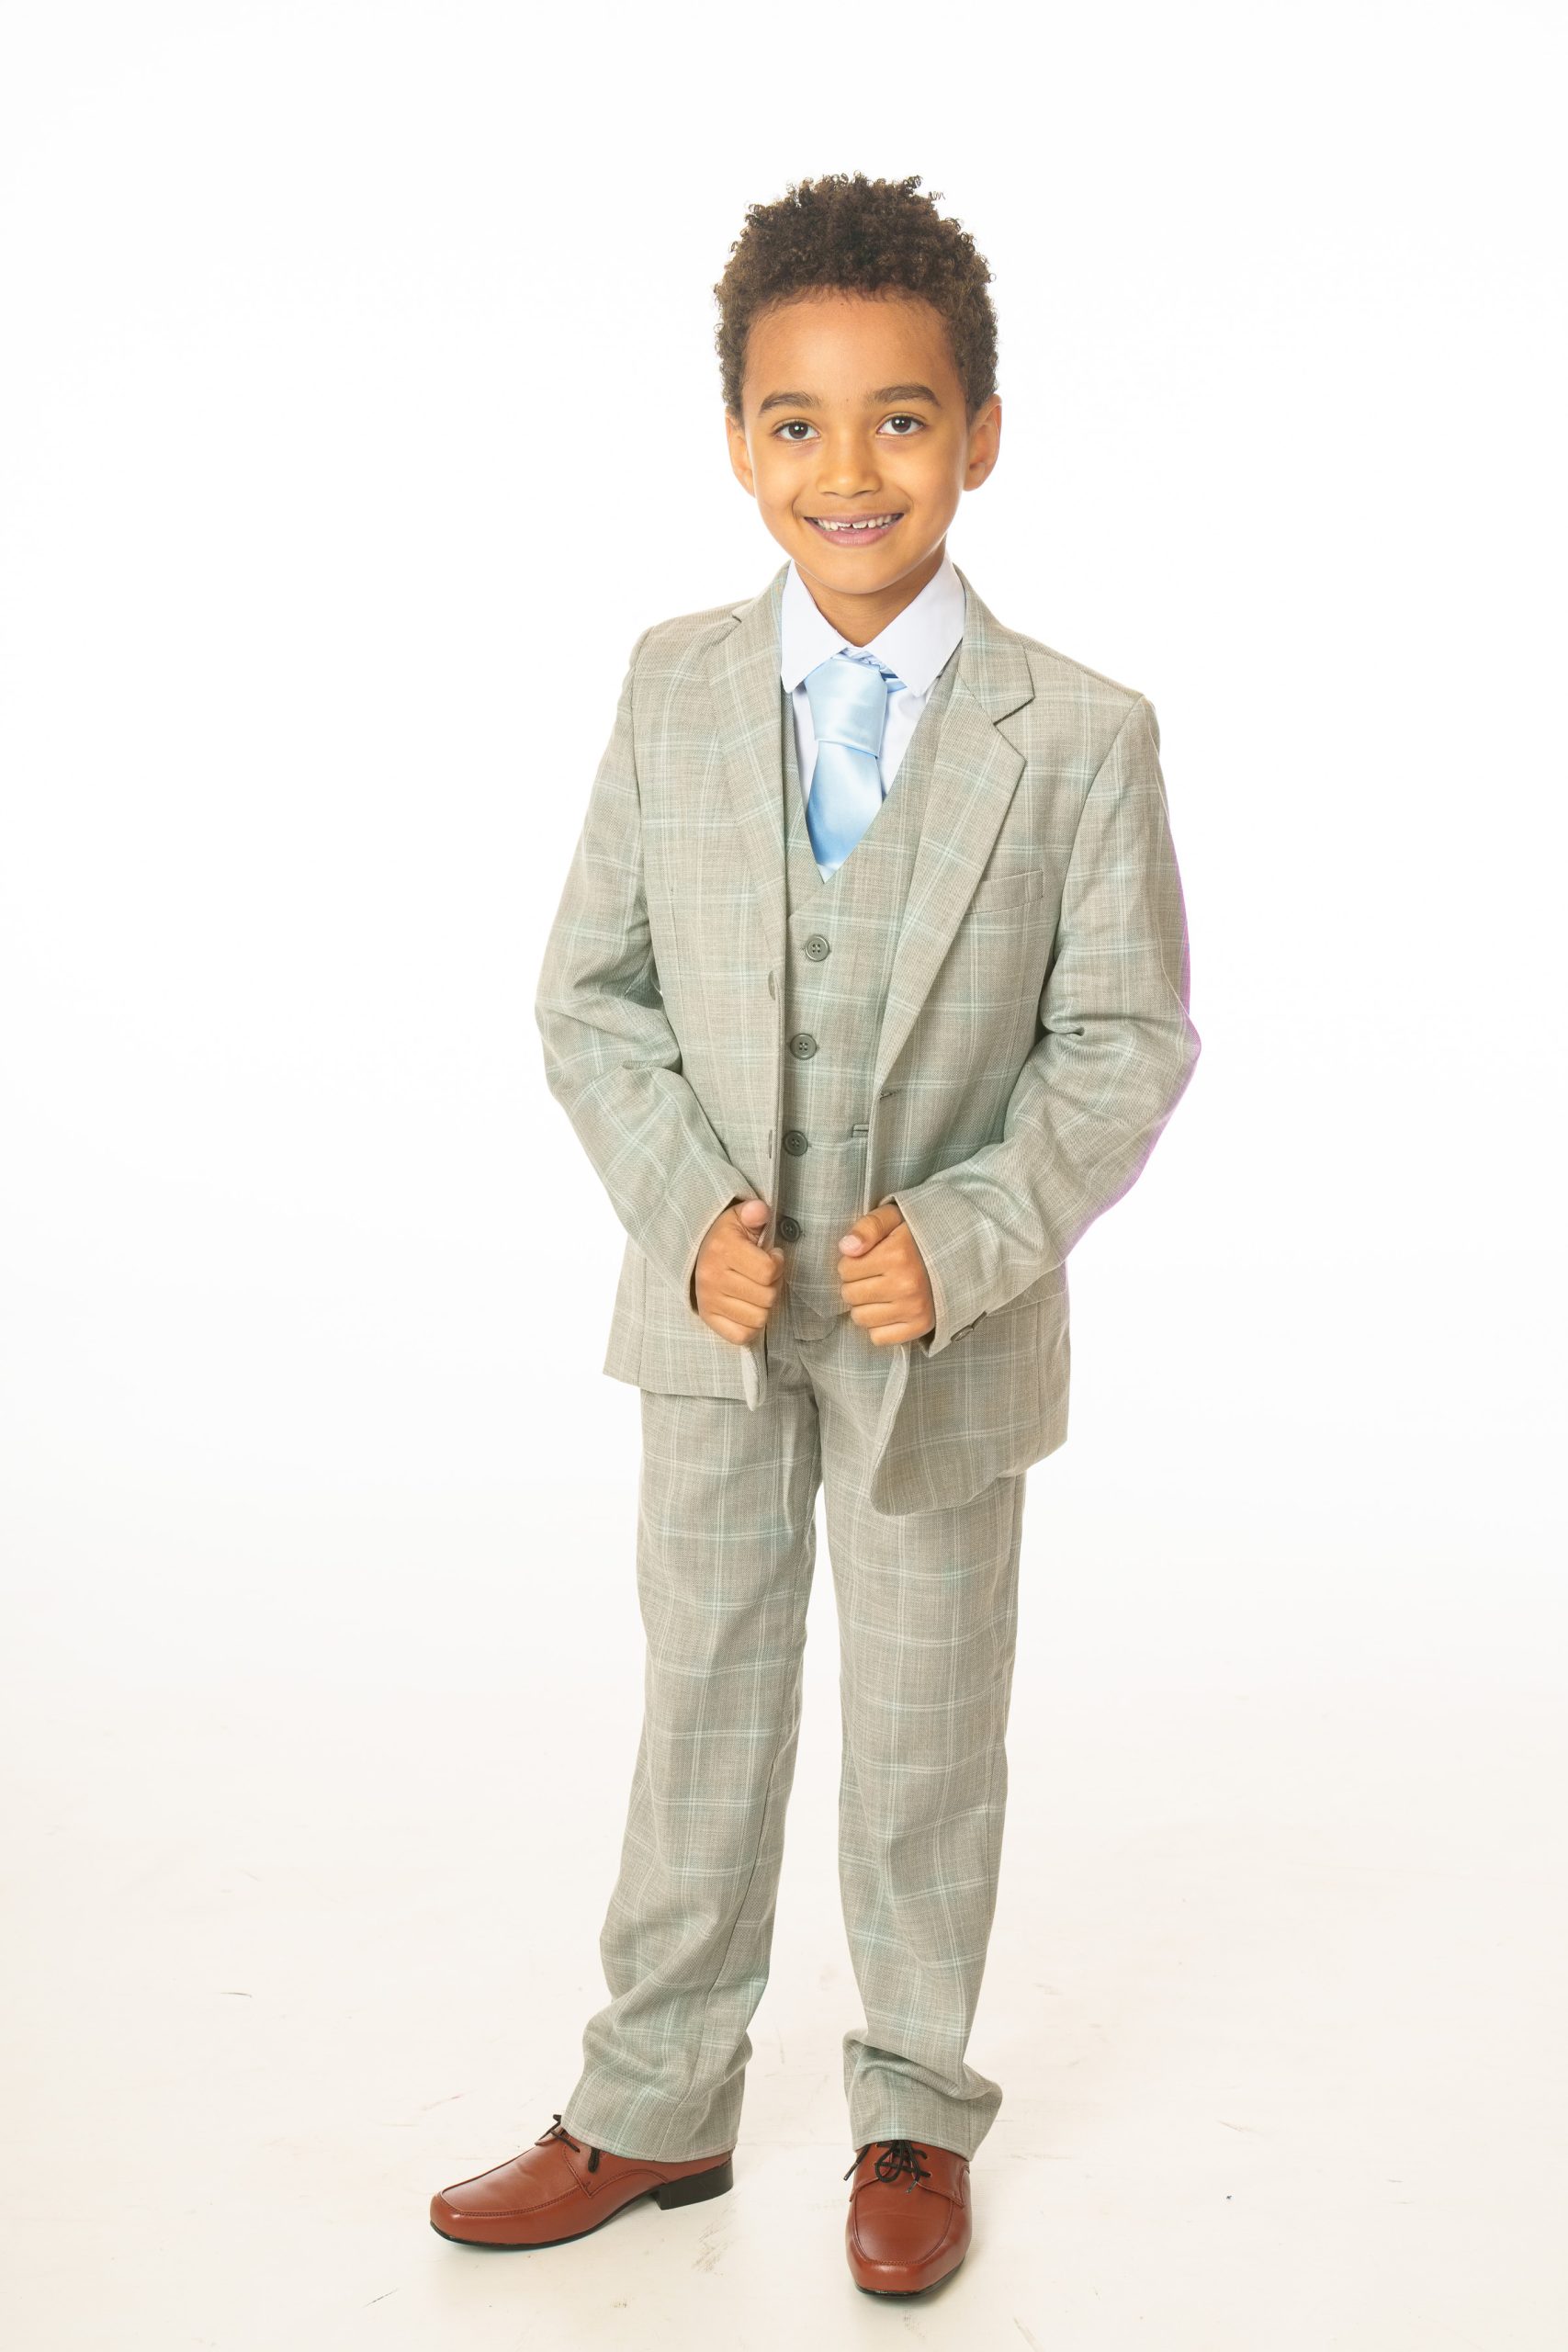 Buy Pro-Ethic Style Developer 3 Piece Suit for Boys | Kids Wear Suit Set  Coat, Pant, Tie & Shirt (Black, 6-7 Years) at Amazon.in